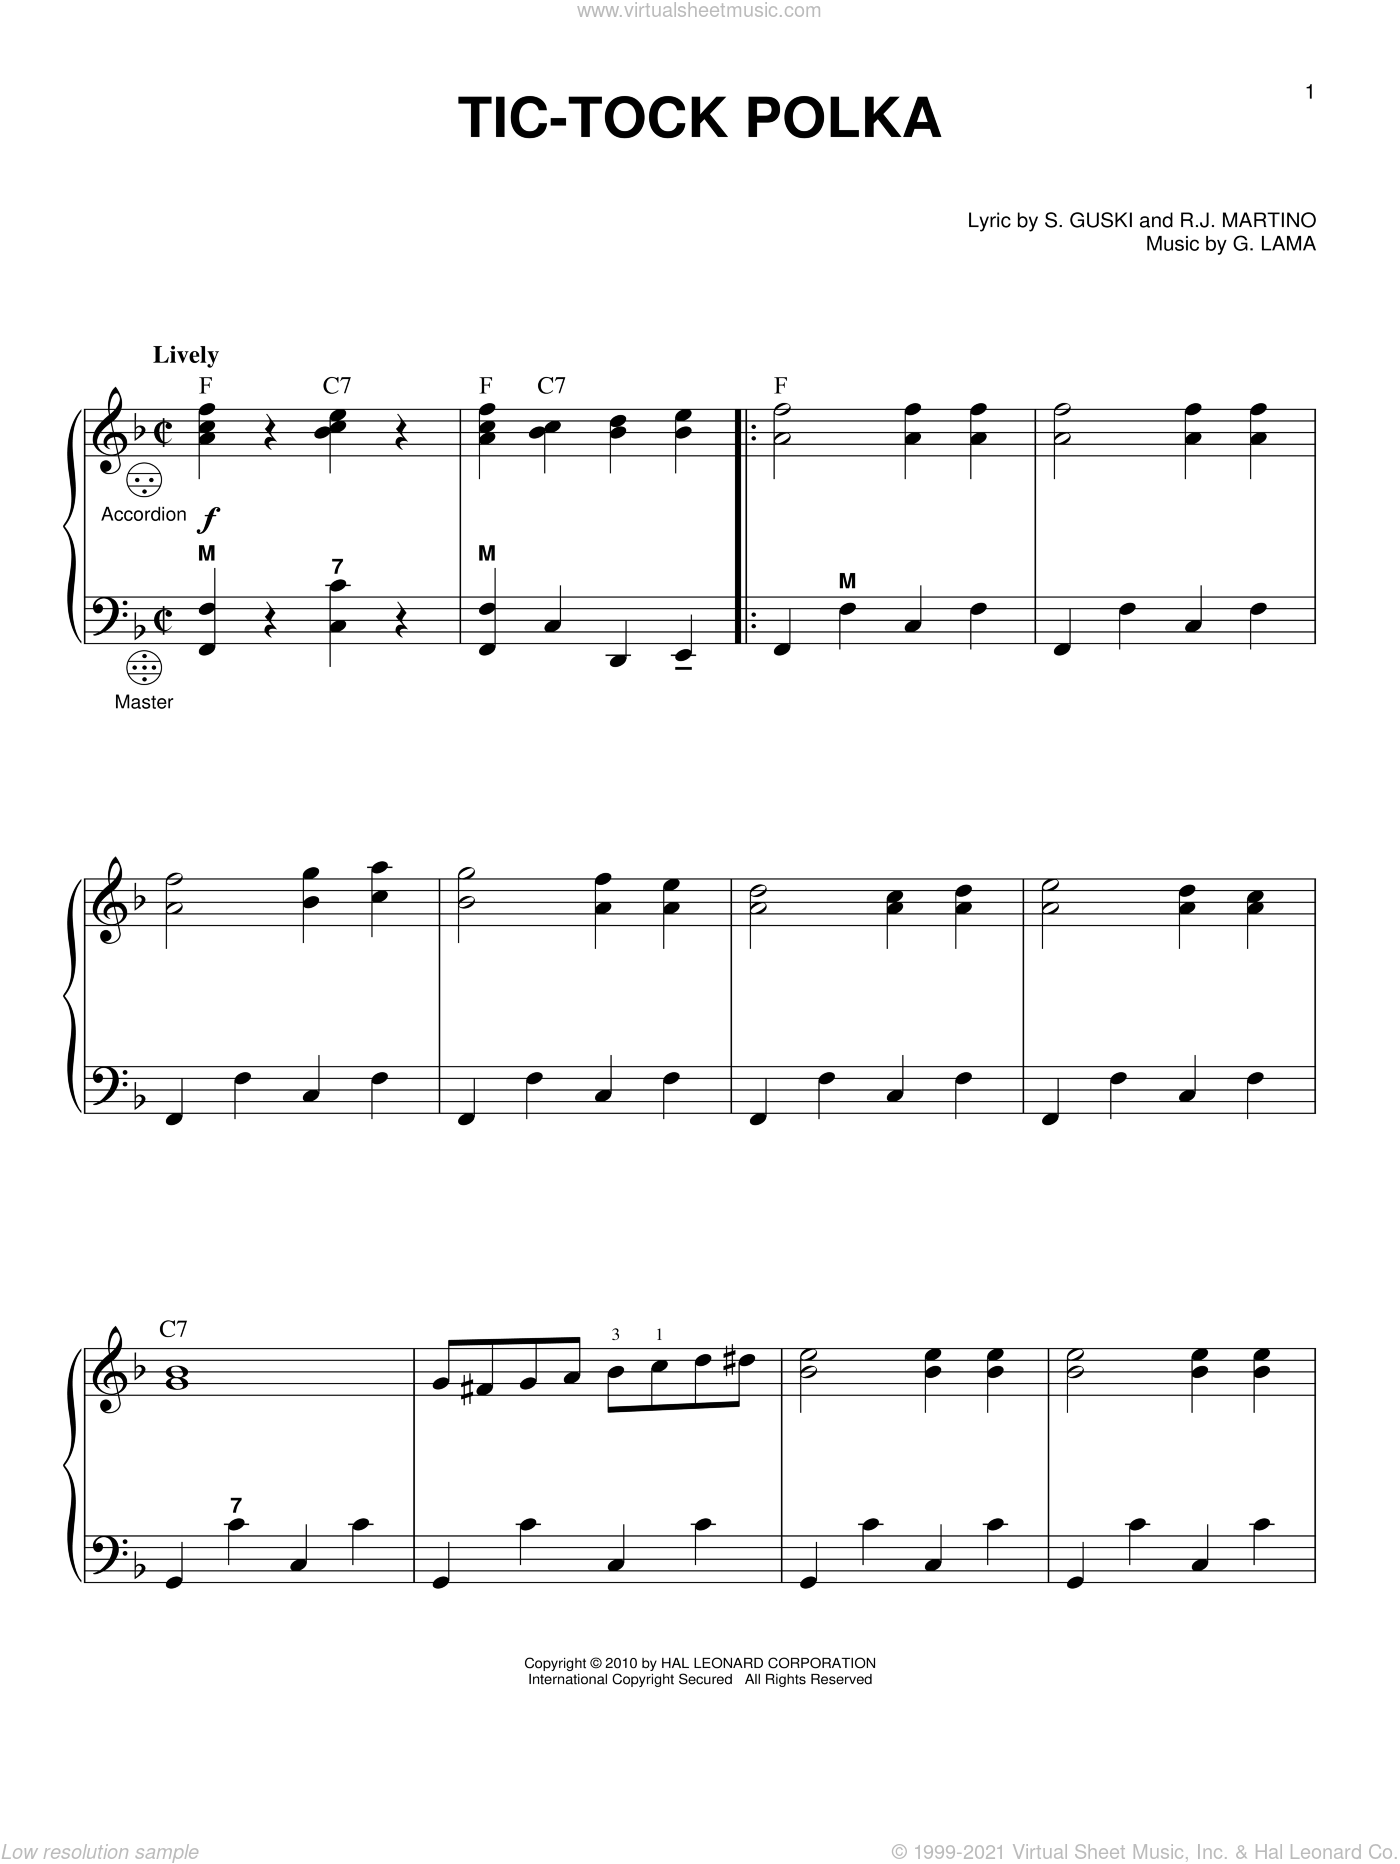 Yankovic - Tic-Tock Polka sheet music for accordion [PDF]